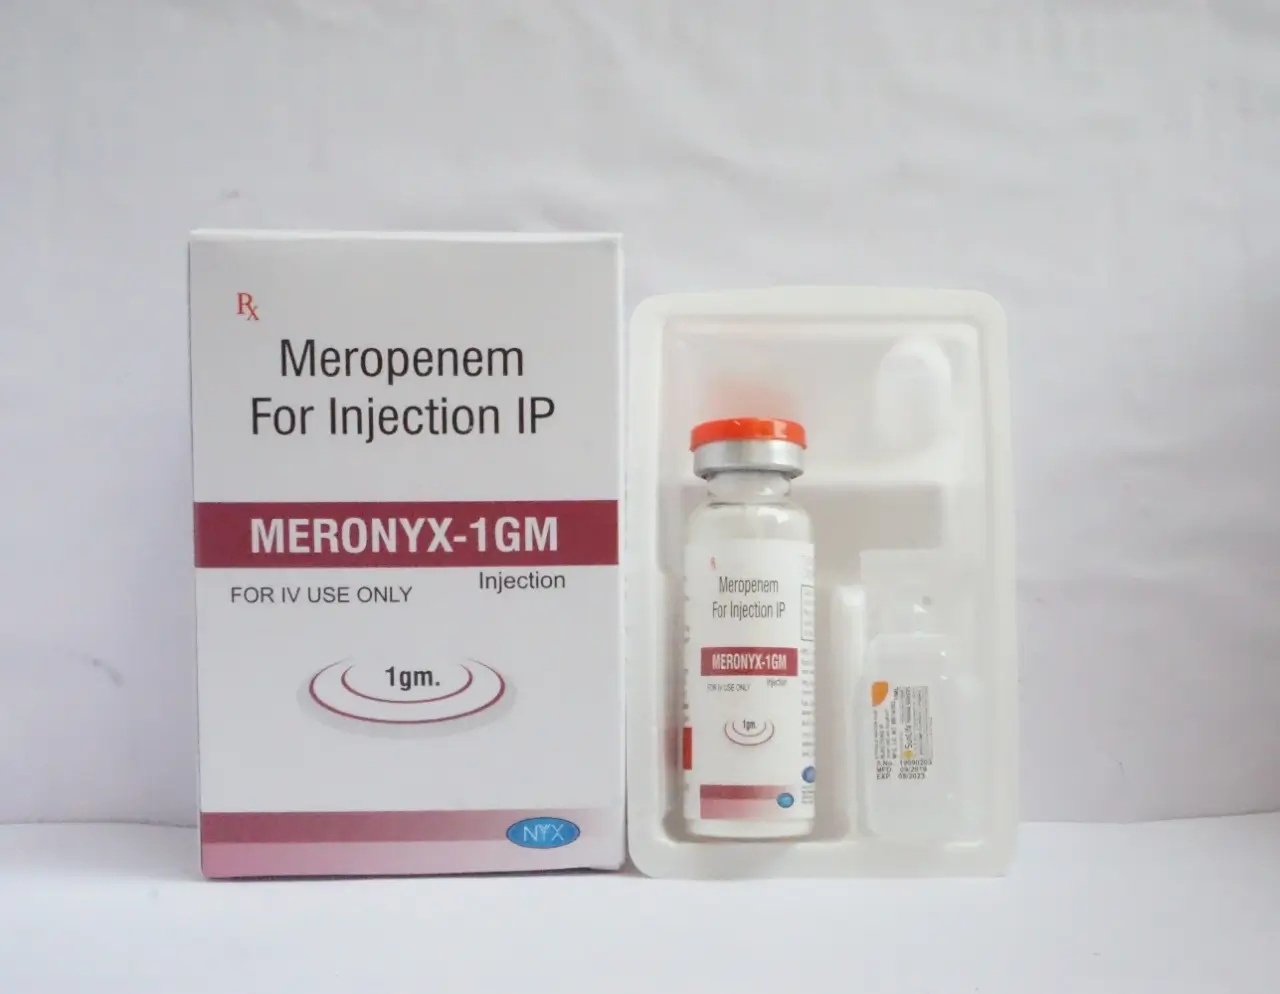 Meropenem For Injection IP